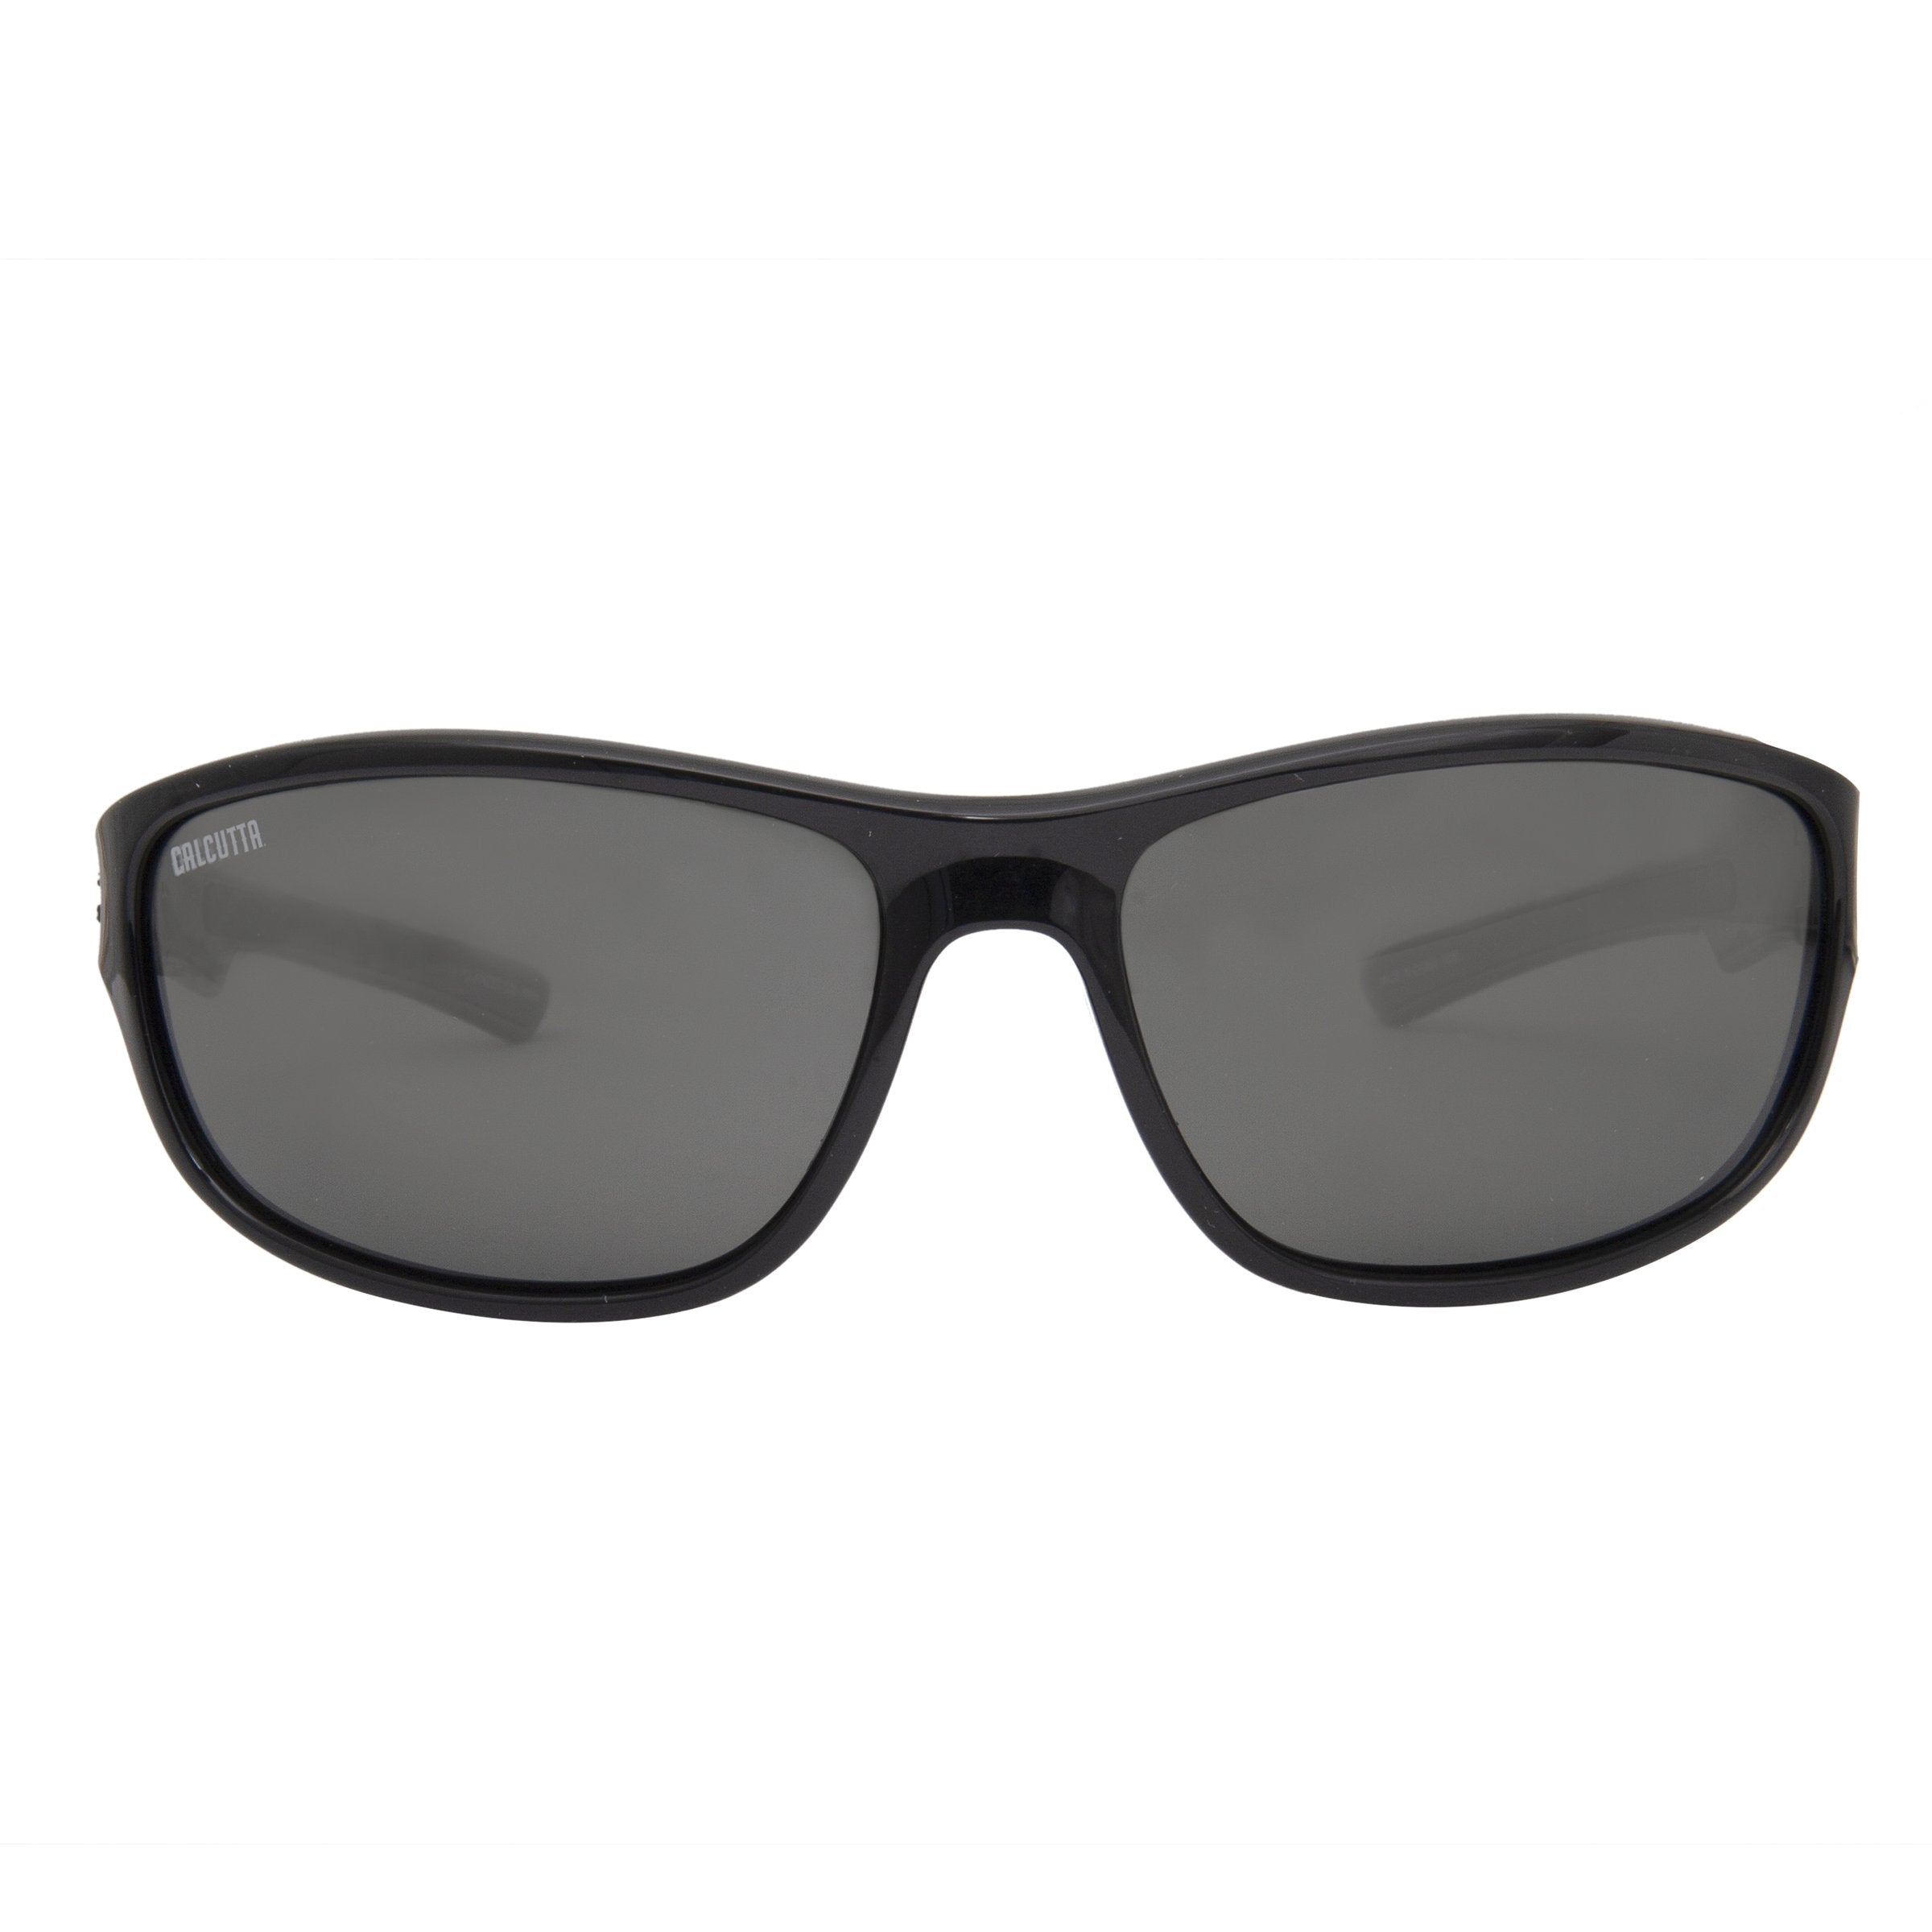 Far Out Sunglasses - Fresh new black wood grain Mavericks with